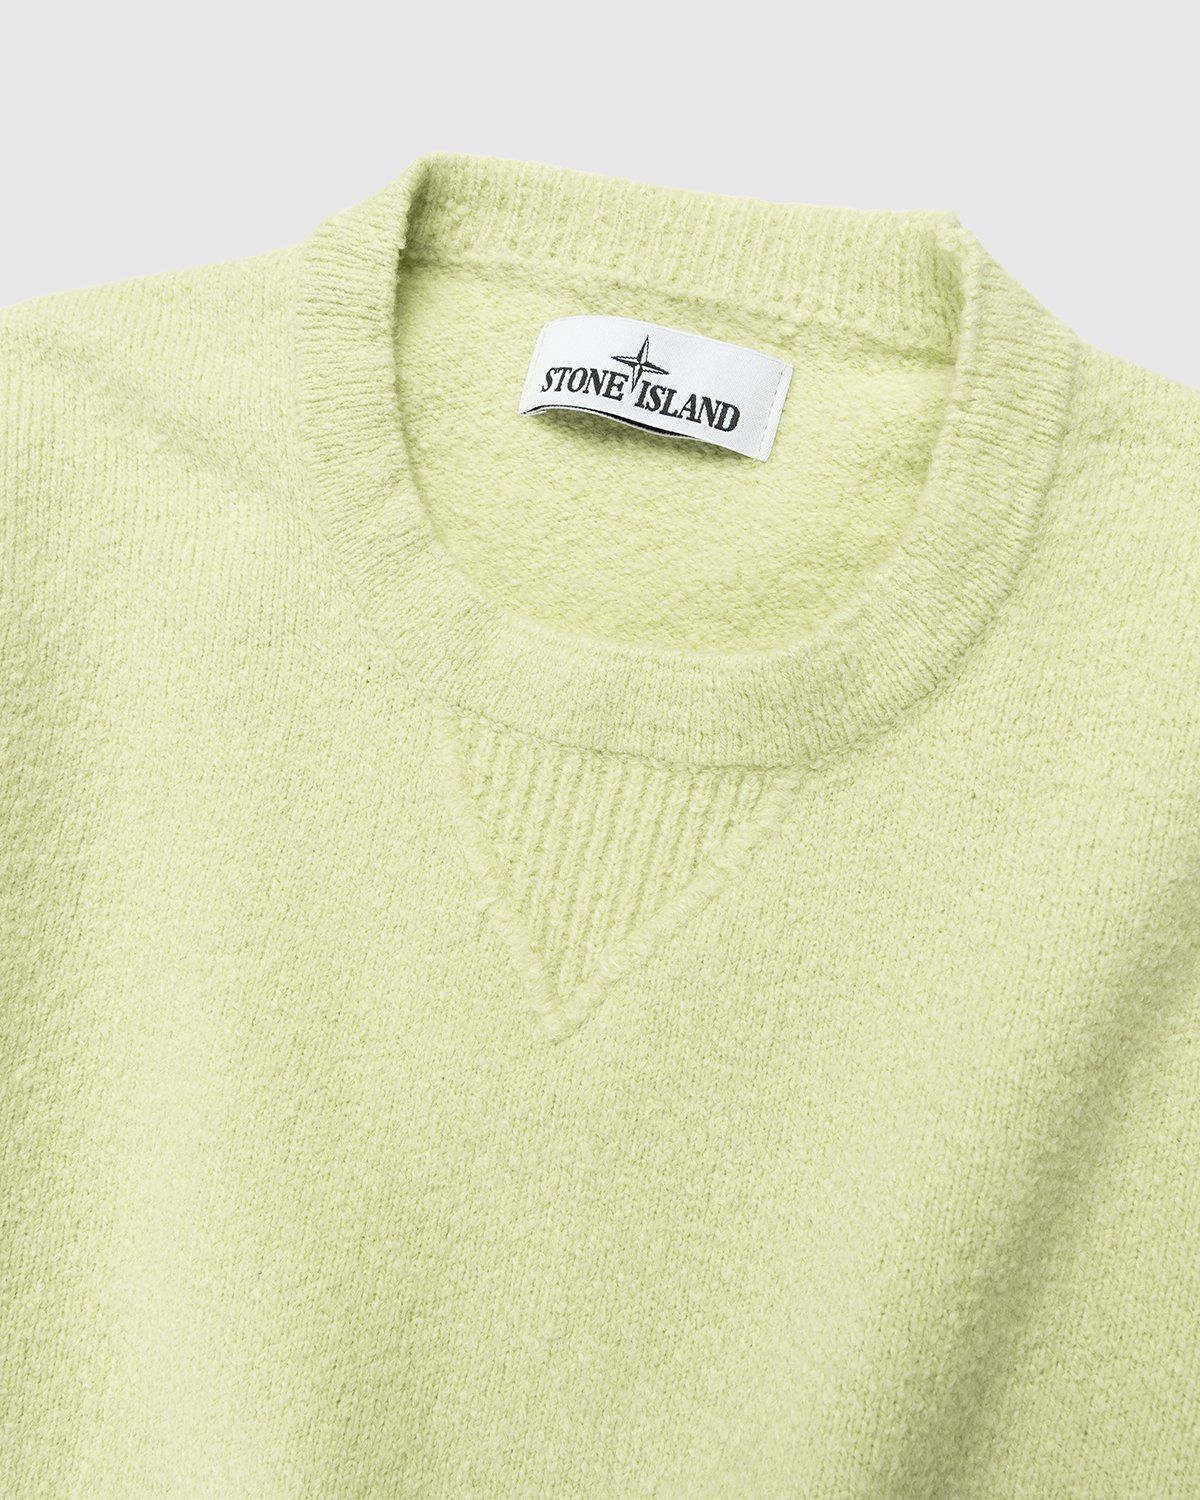 Stone Island – 548D2 Stockinette Stitch Sweater Light Green - Knitwear - Green - Image 3